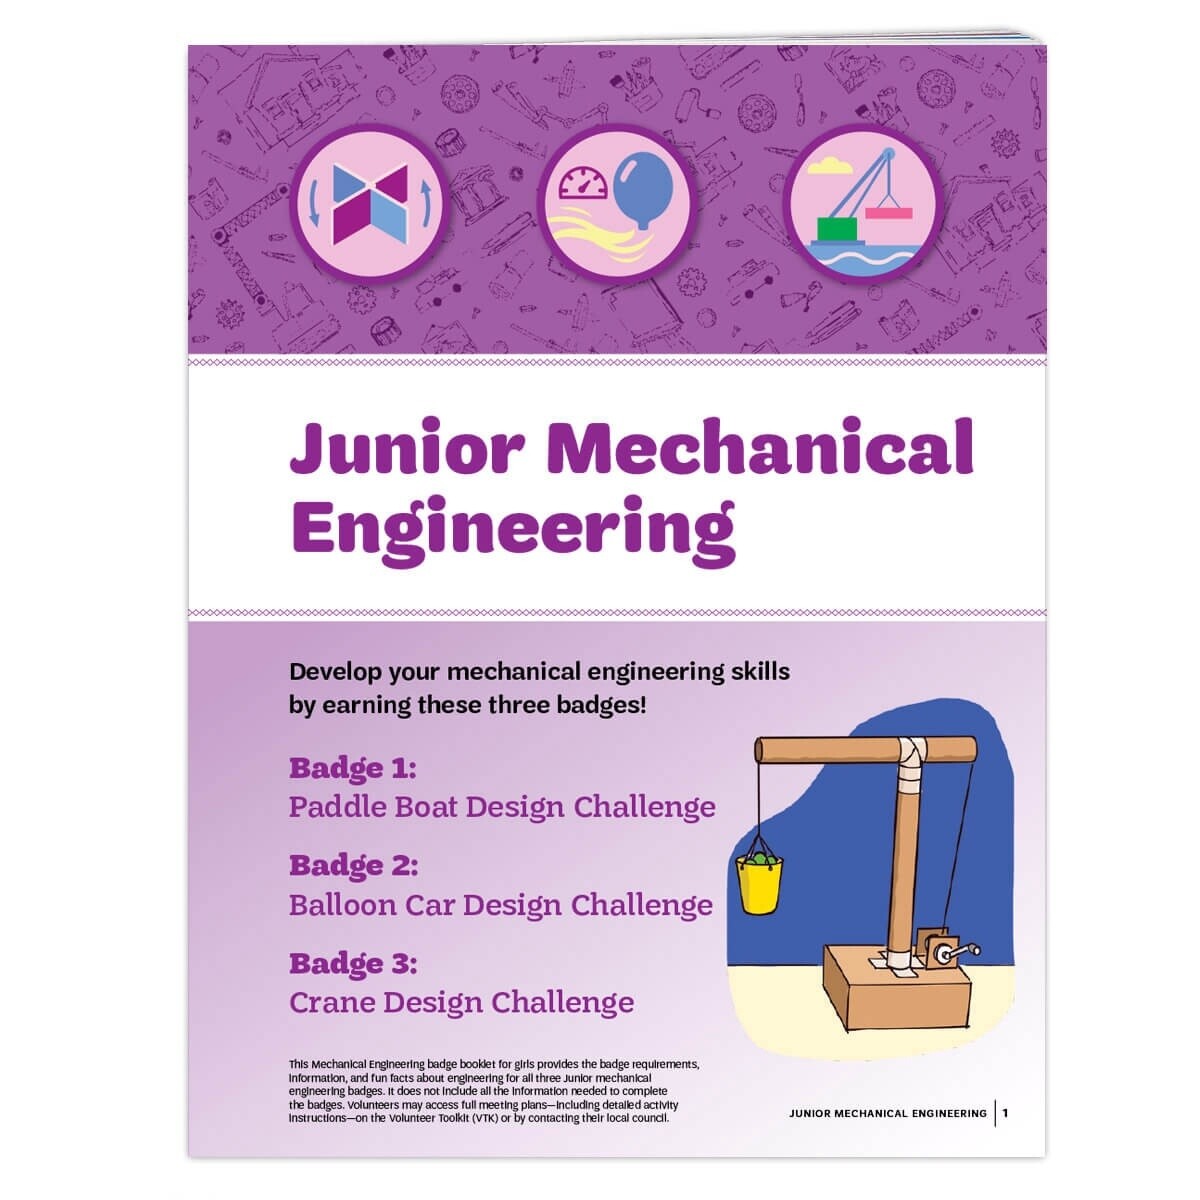 Junior Mechanical Engineering Badge Requirements